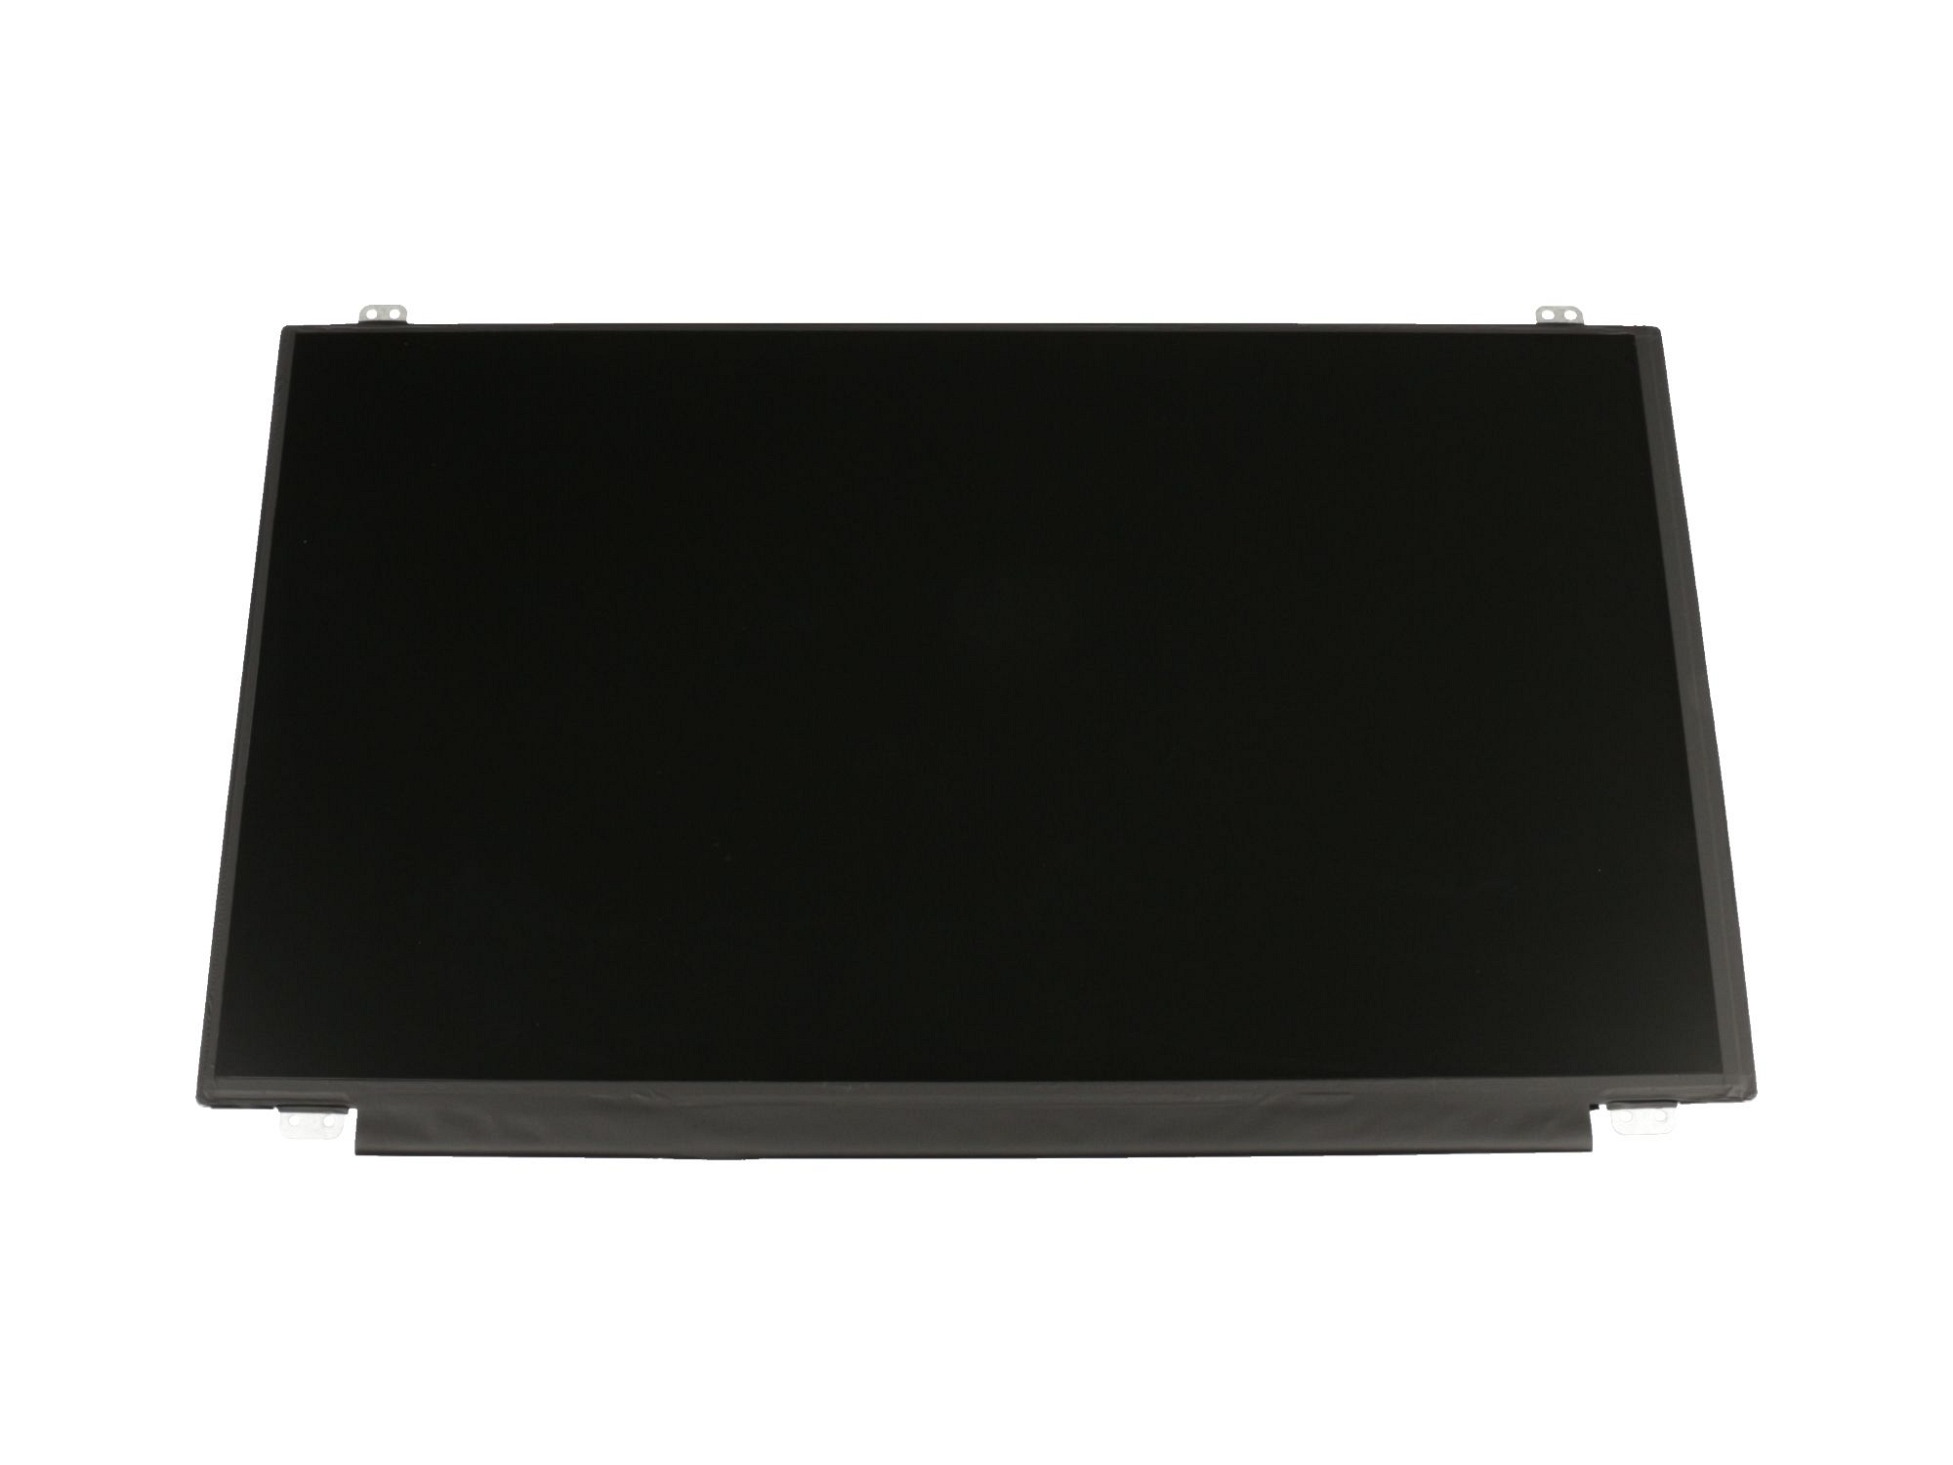 LG LP156WH3-TPT2 Display (1366x768) matt slimline